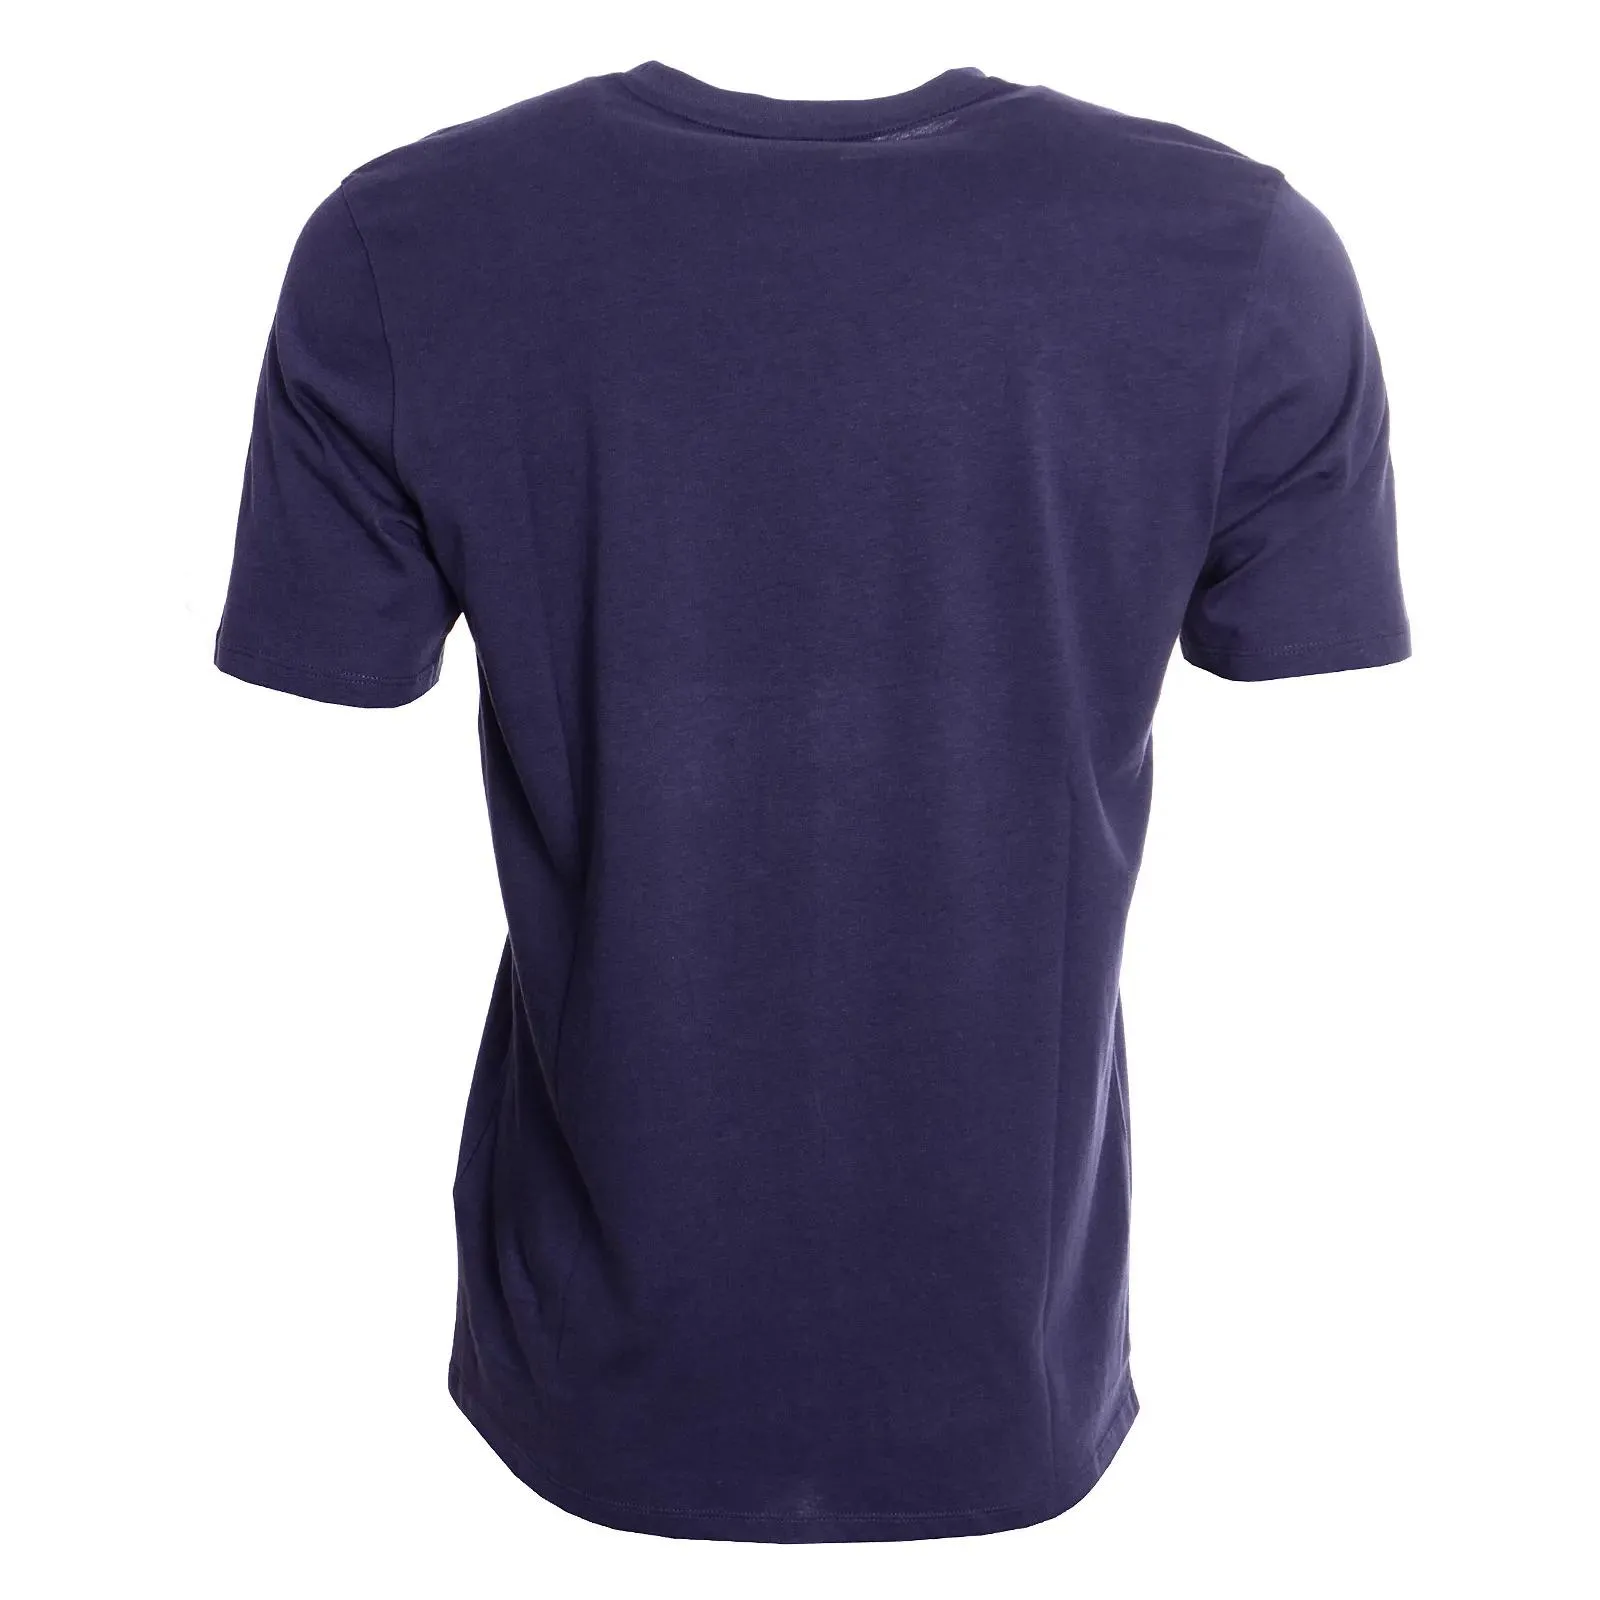 Umbro T-shirt UMBRO majica kratkih rukava LRG LOGO CTN TEE 